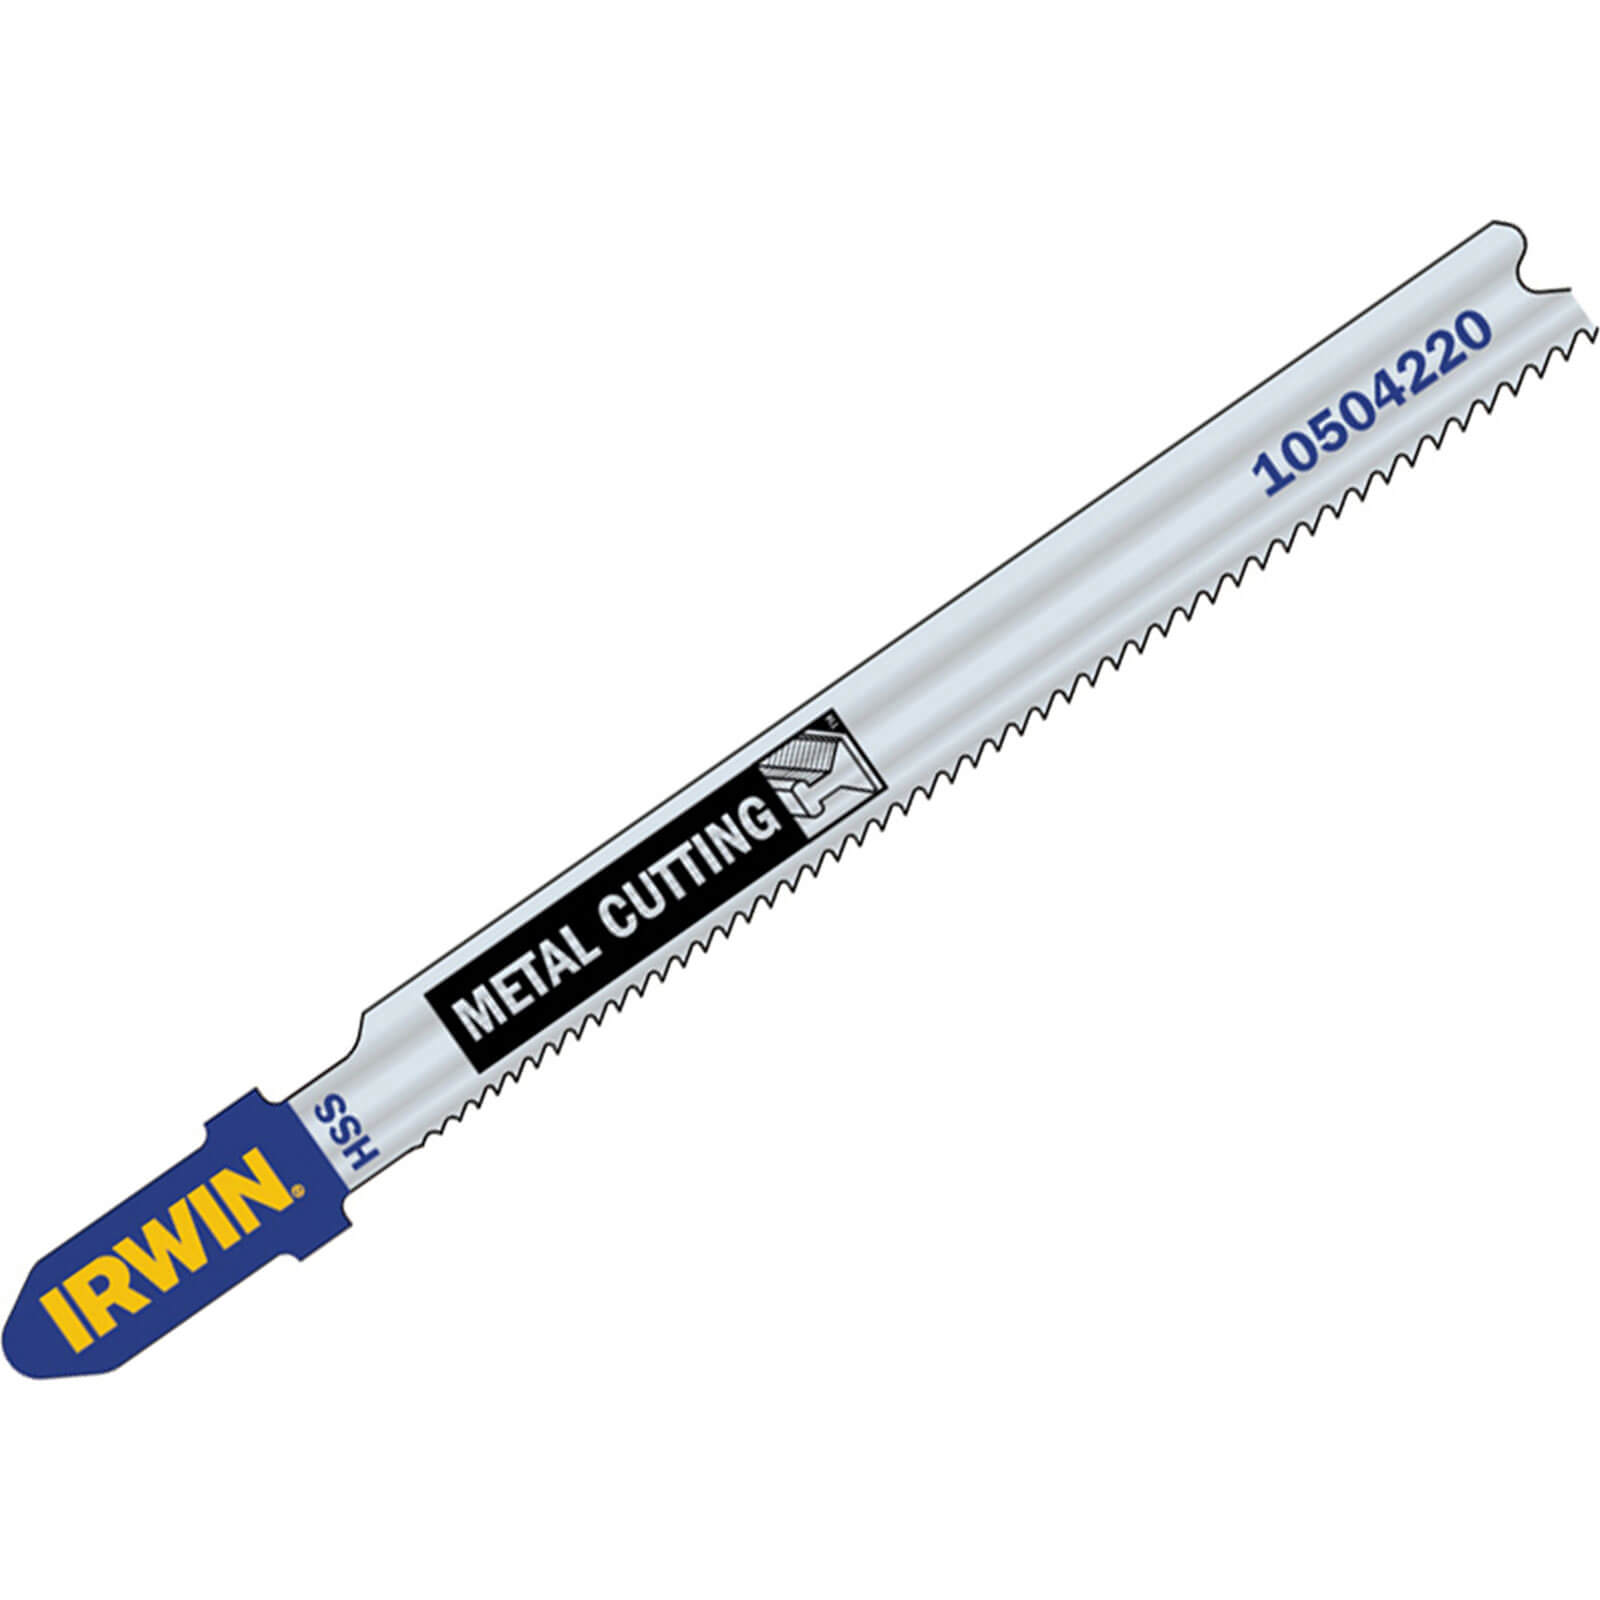 Photos - Power Tool Accessory IRWIN T318A T Shank Metal Cutting Jigsaw Blades Pack of 5 IRW10504230 